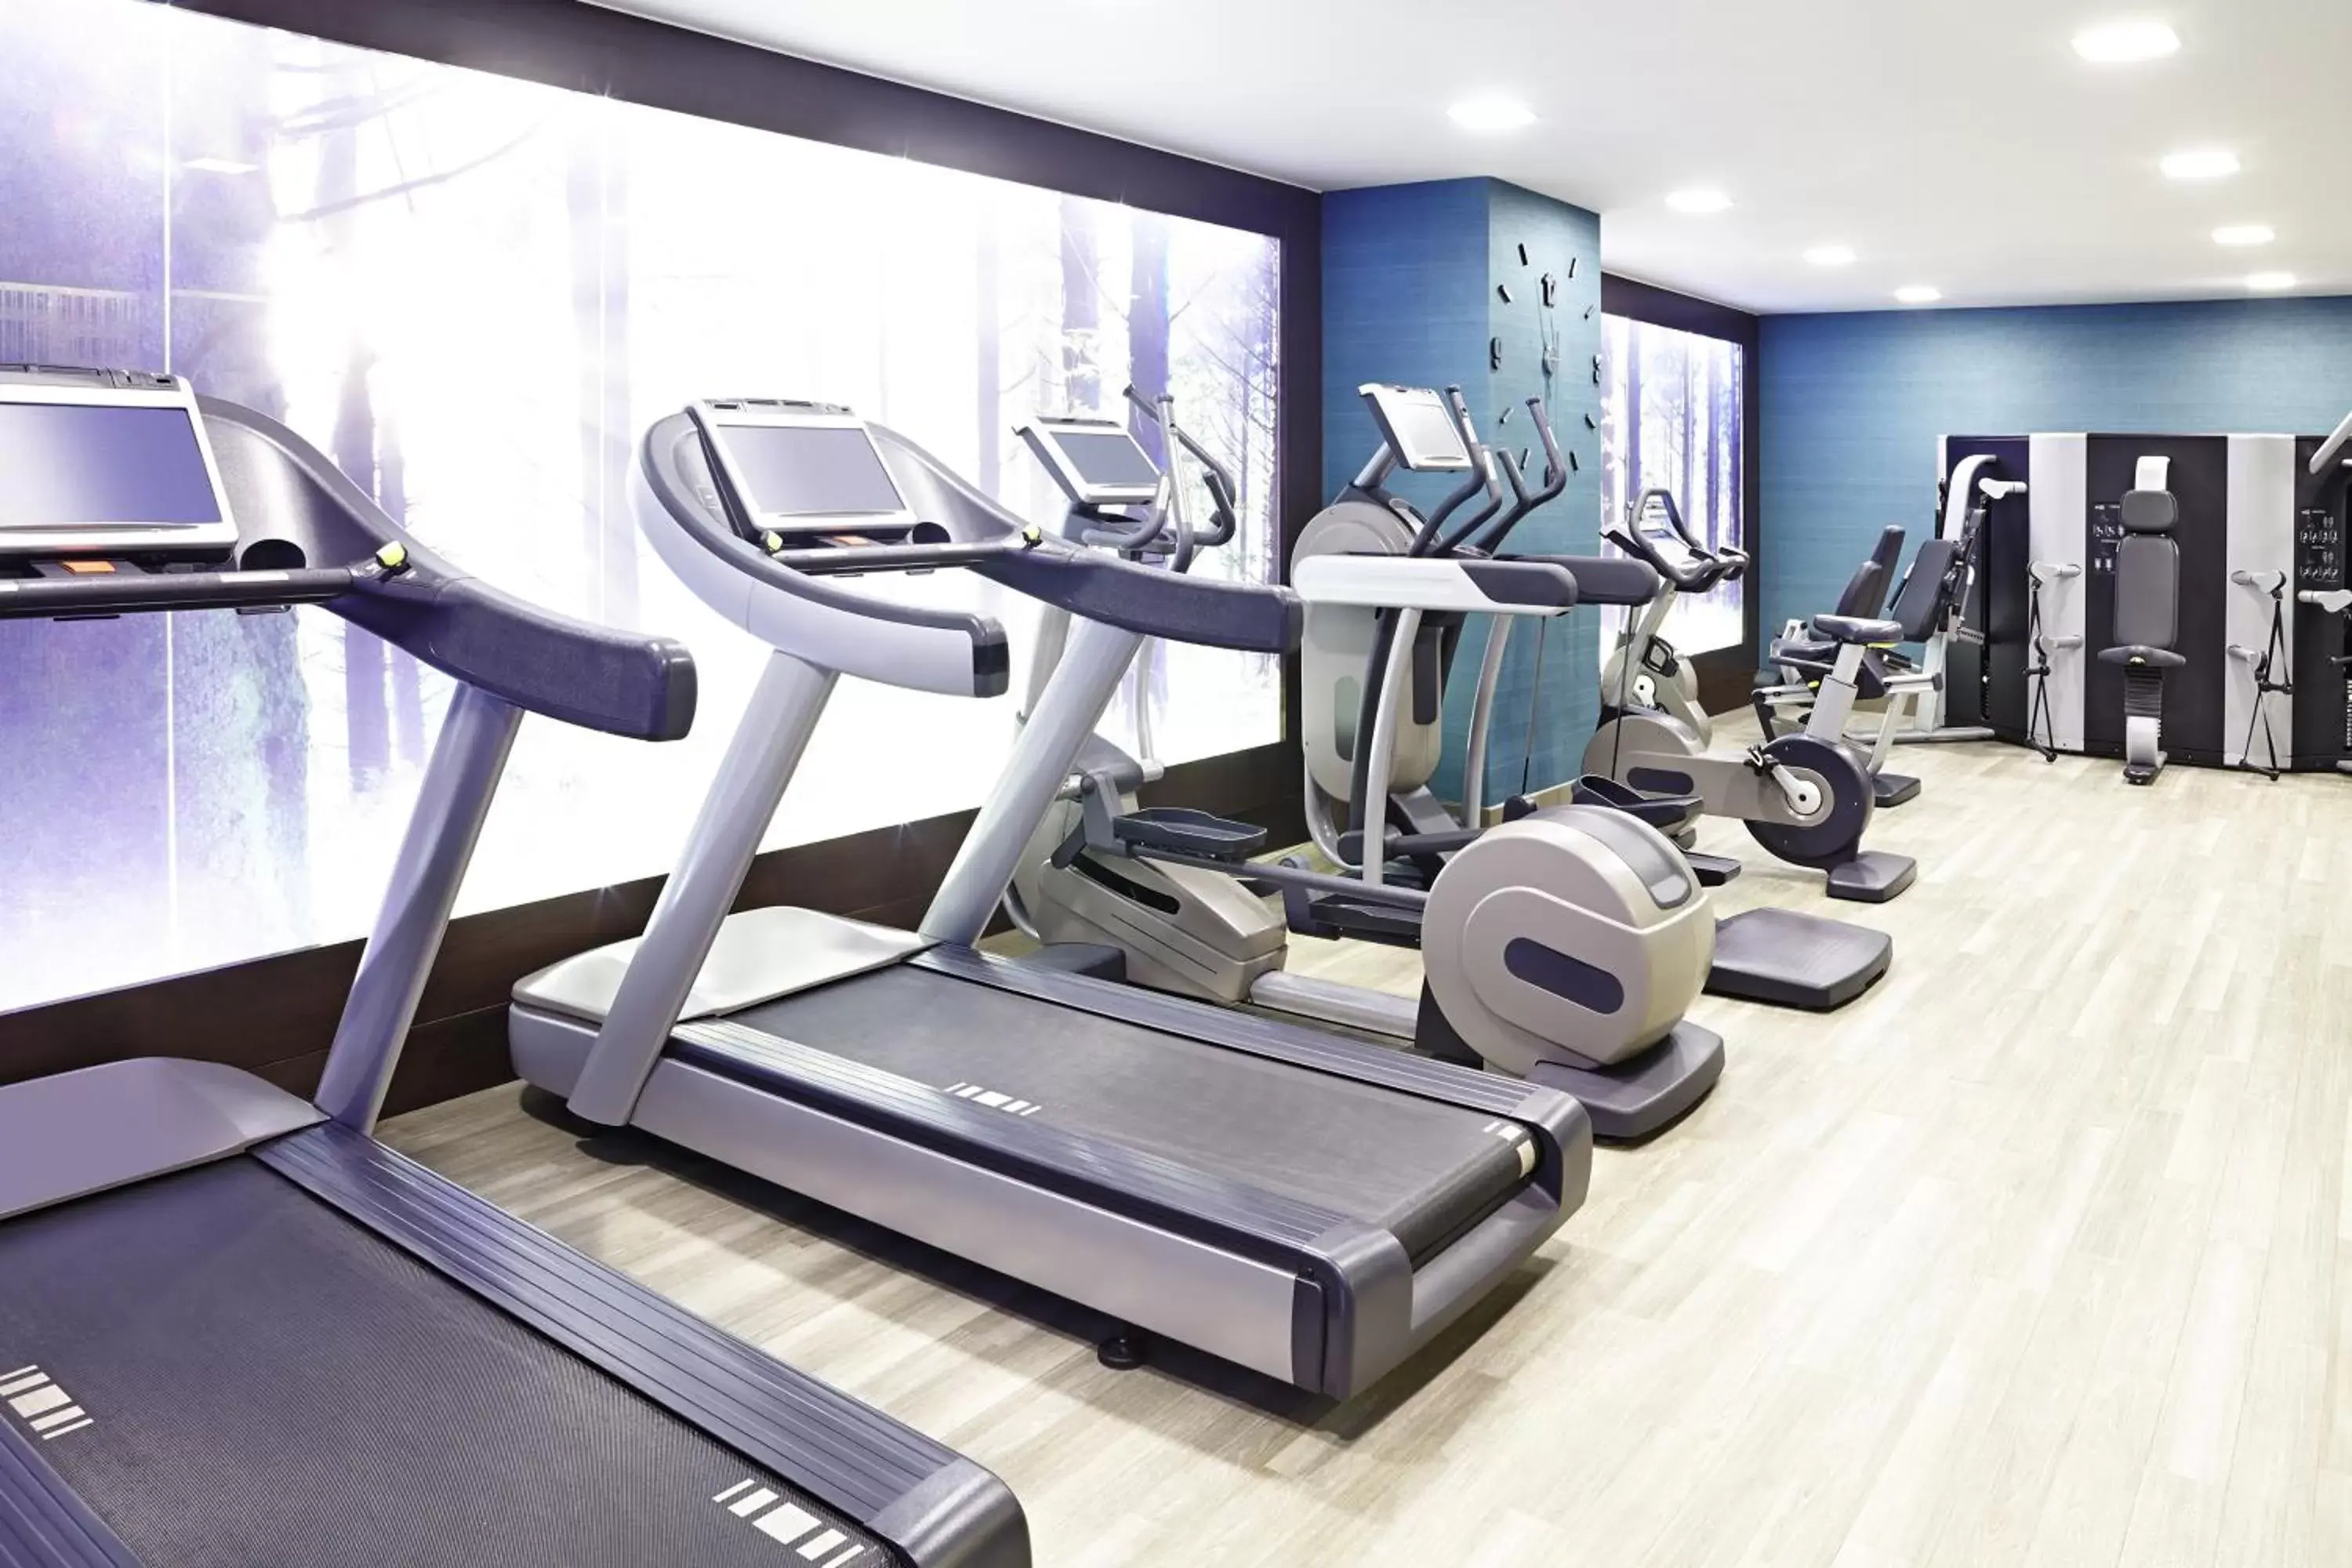 Fitness centre/facilities, Fitness Center/Facilities in Novotel London Brentford